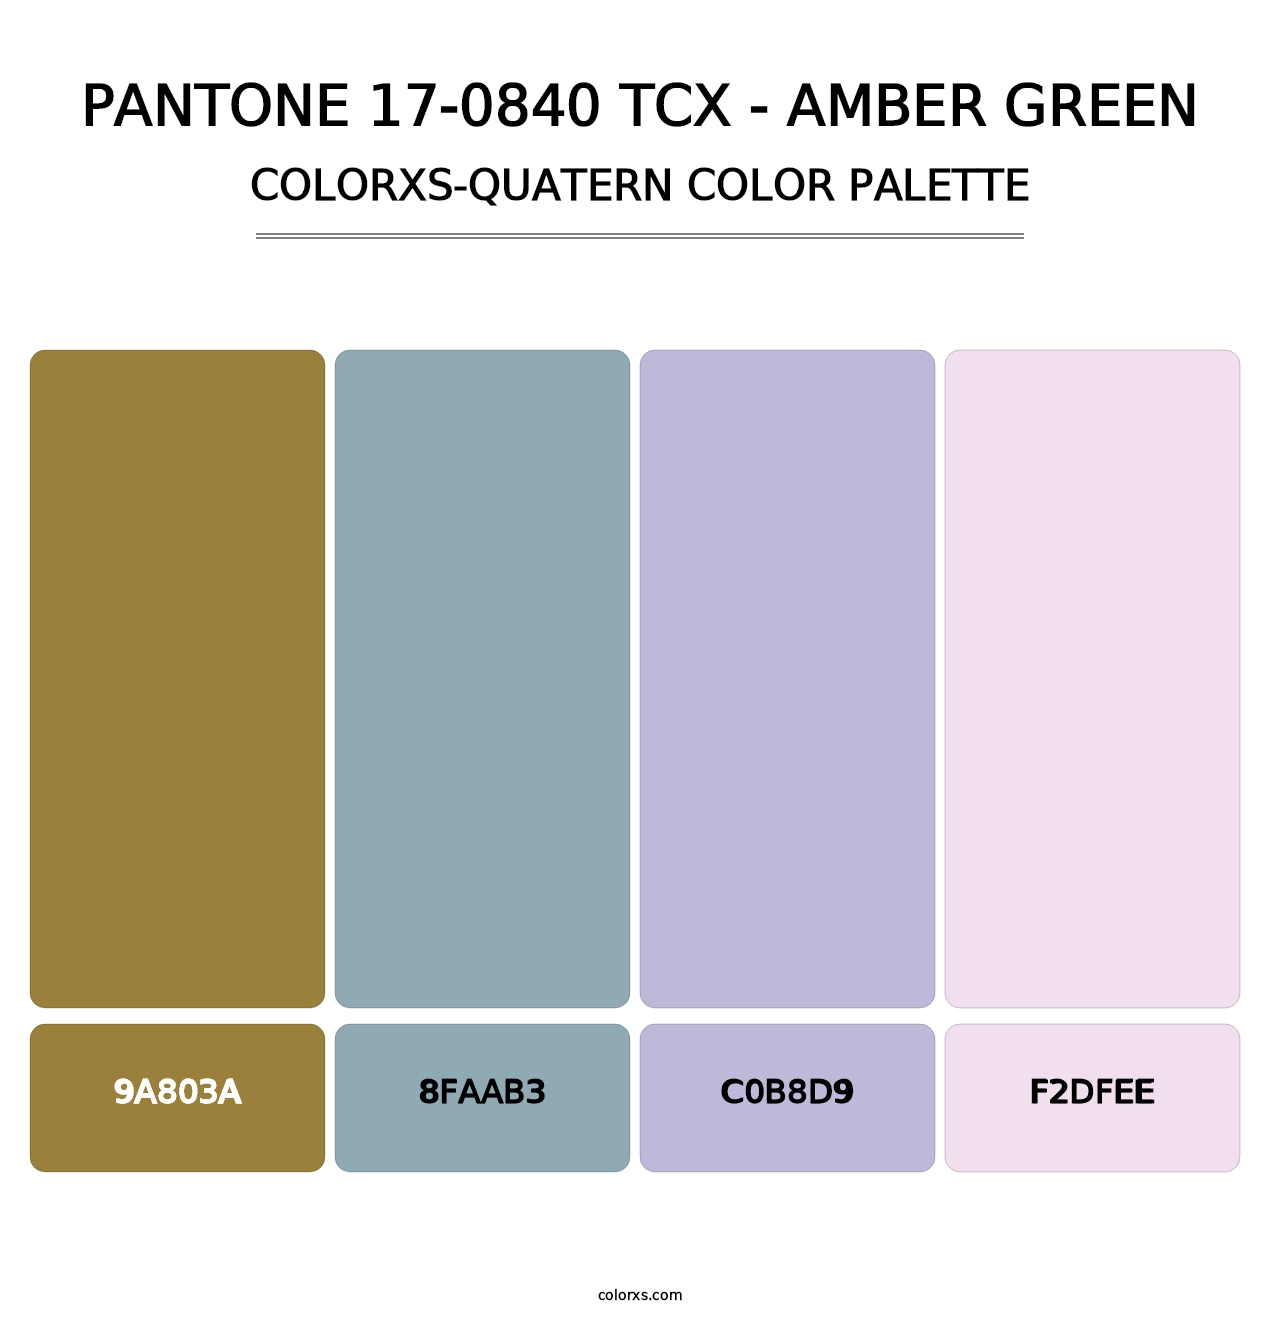 PANTONE 17-0840 TCX - Amber Green - Colorxs Quatern Palette